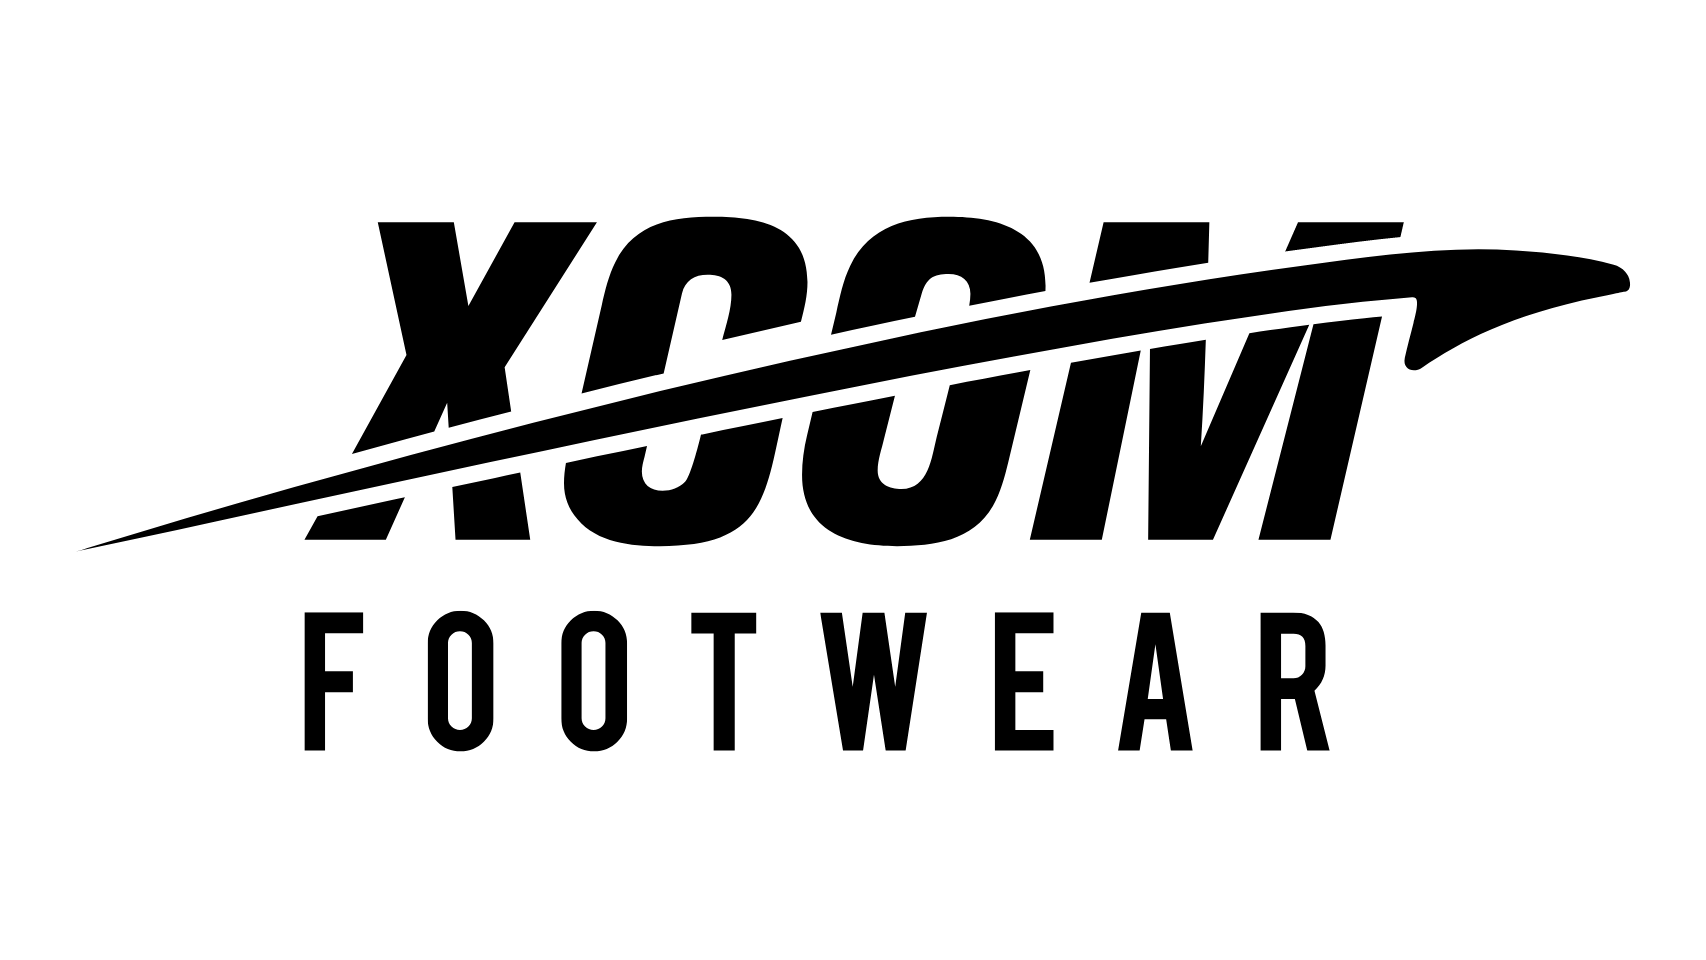 XCOM Footwear